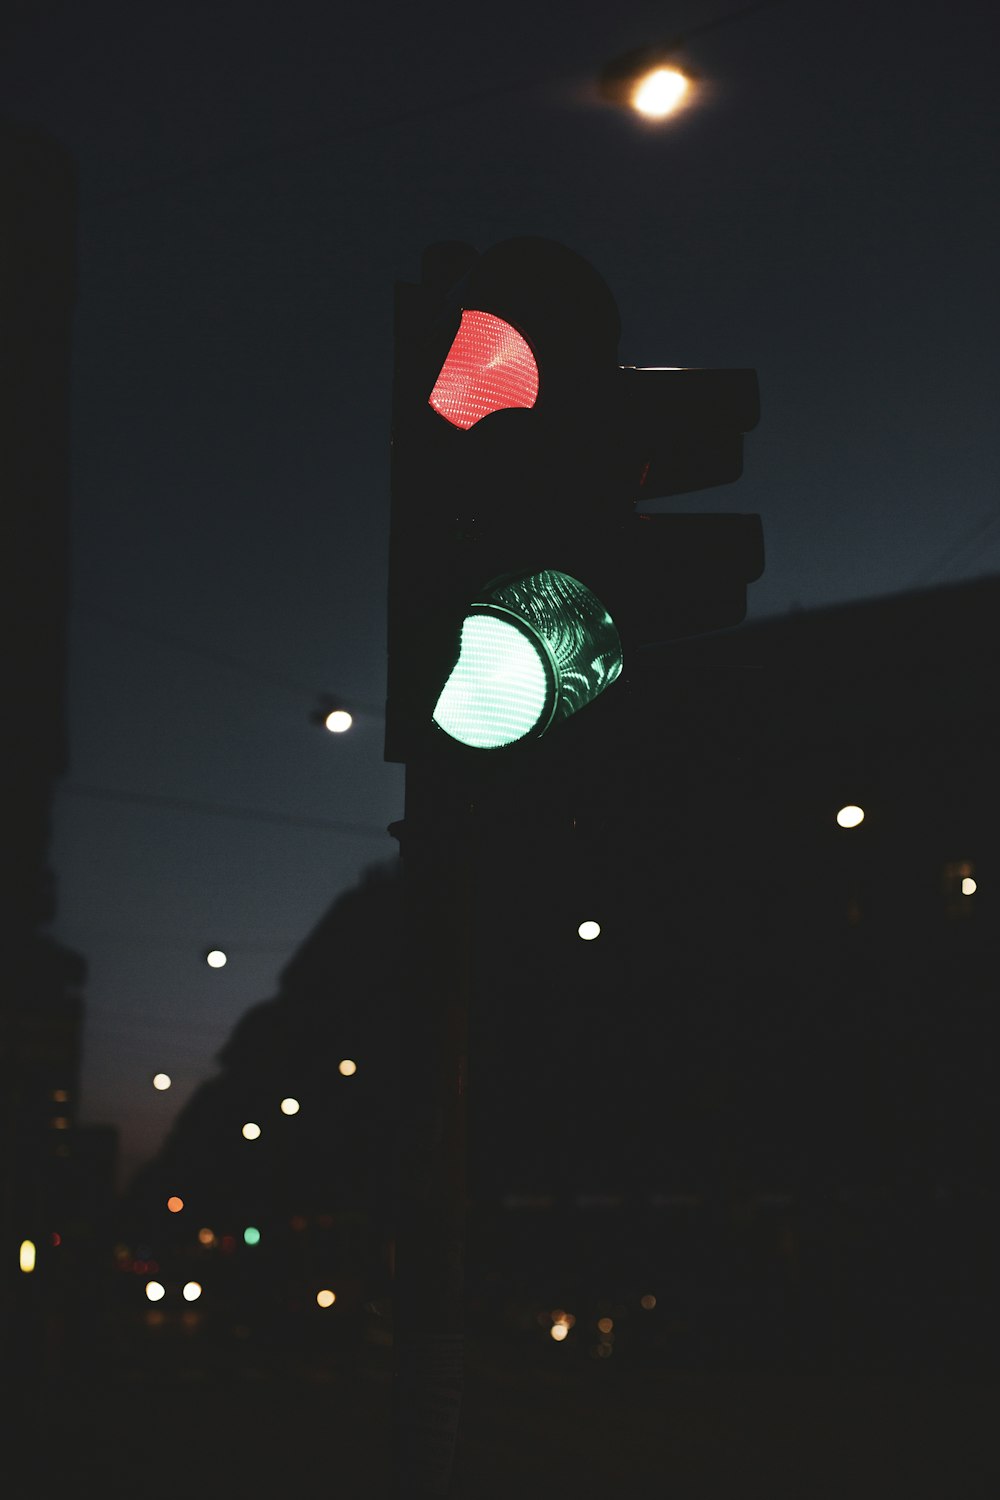 semaforo verde durante le ore notturne